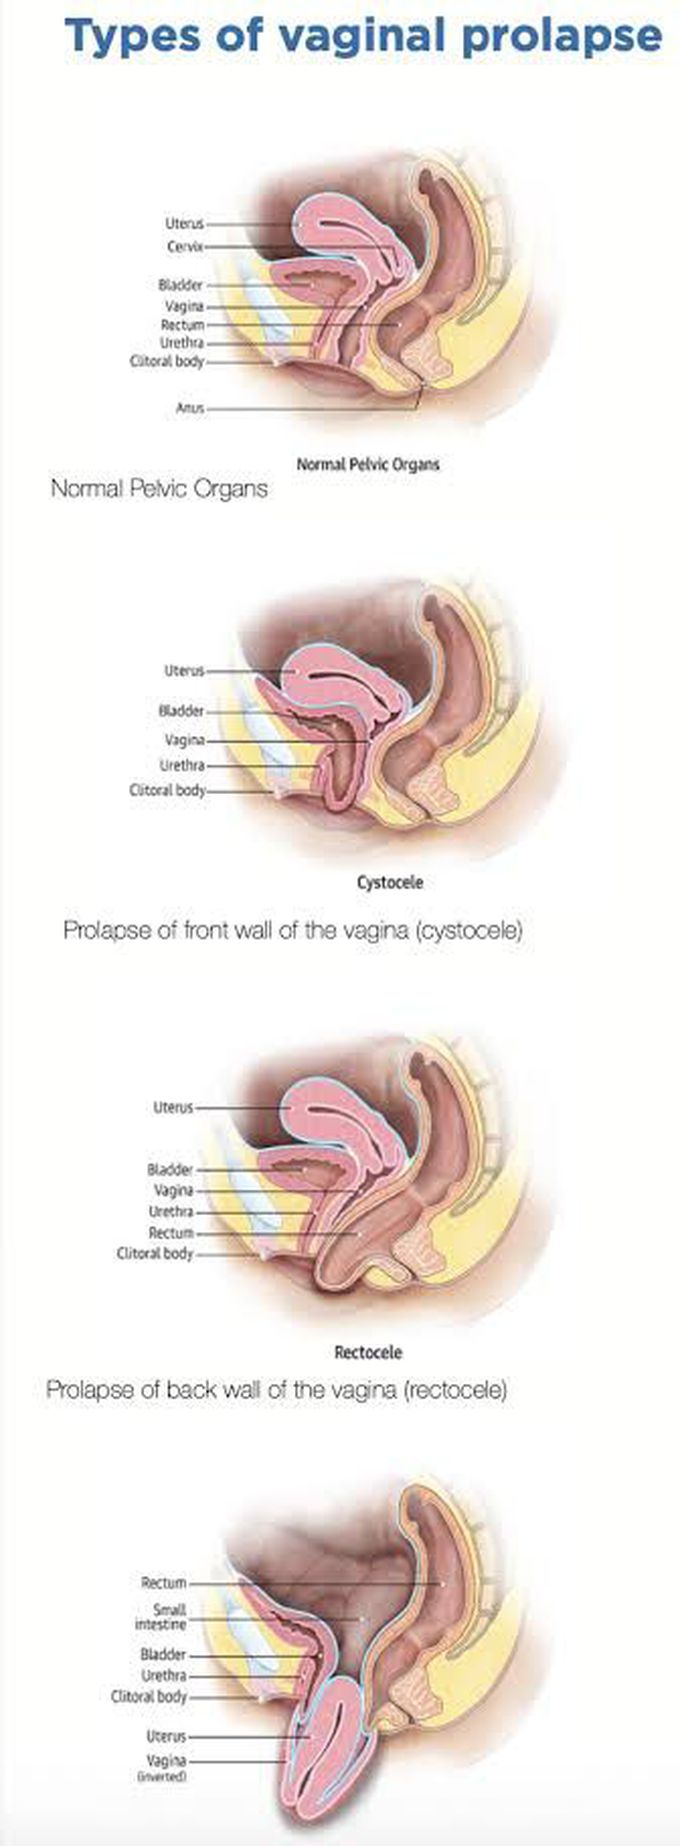 Types of Vaginal Prolapse